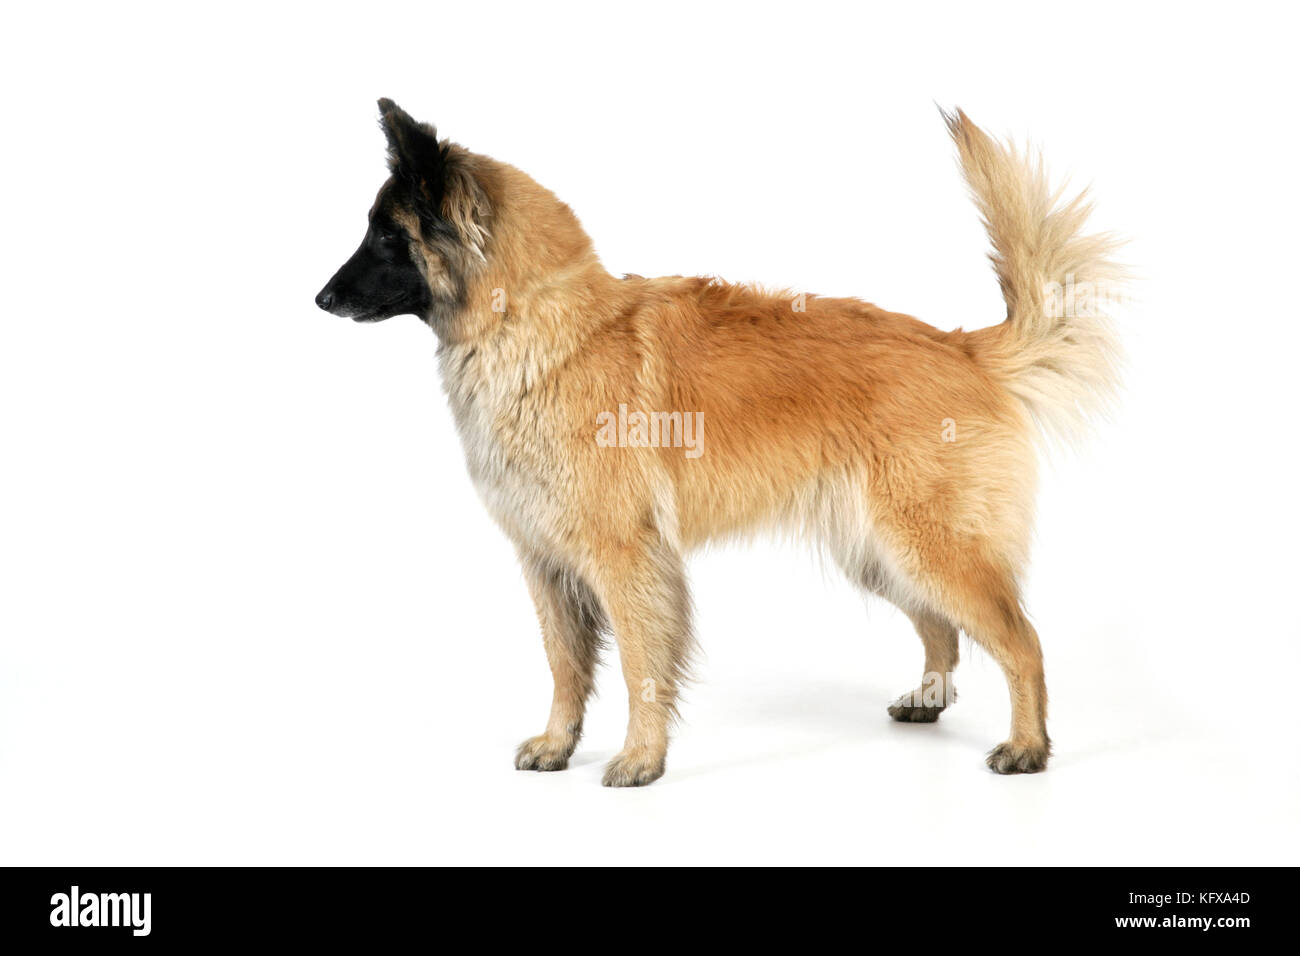 DOG Posture. Dominant Stock Photo